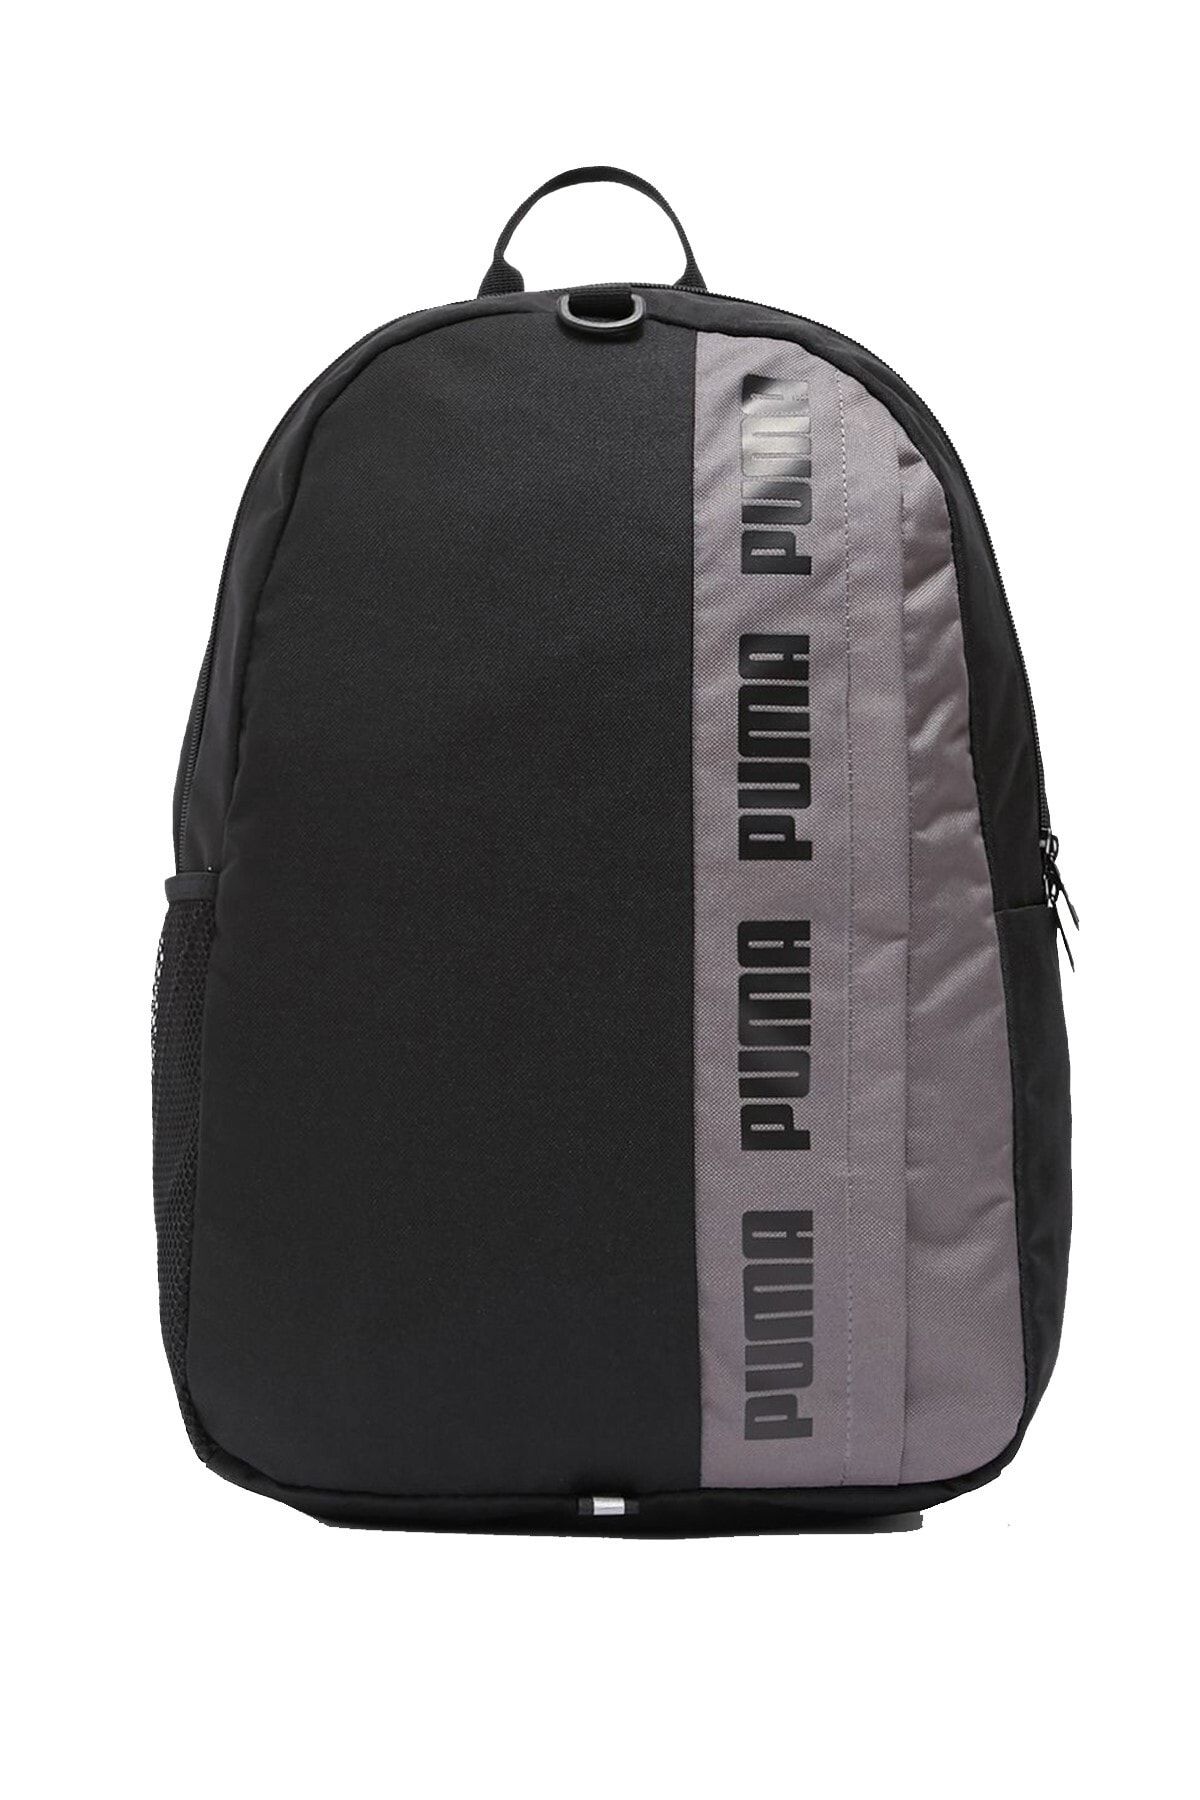 Puma Phase Backpack Iı Sırt Çantası 07662201